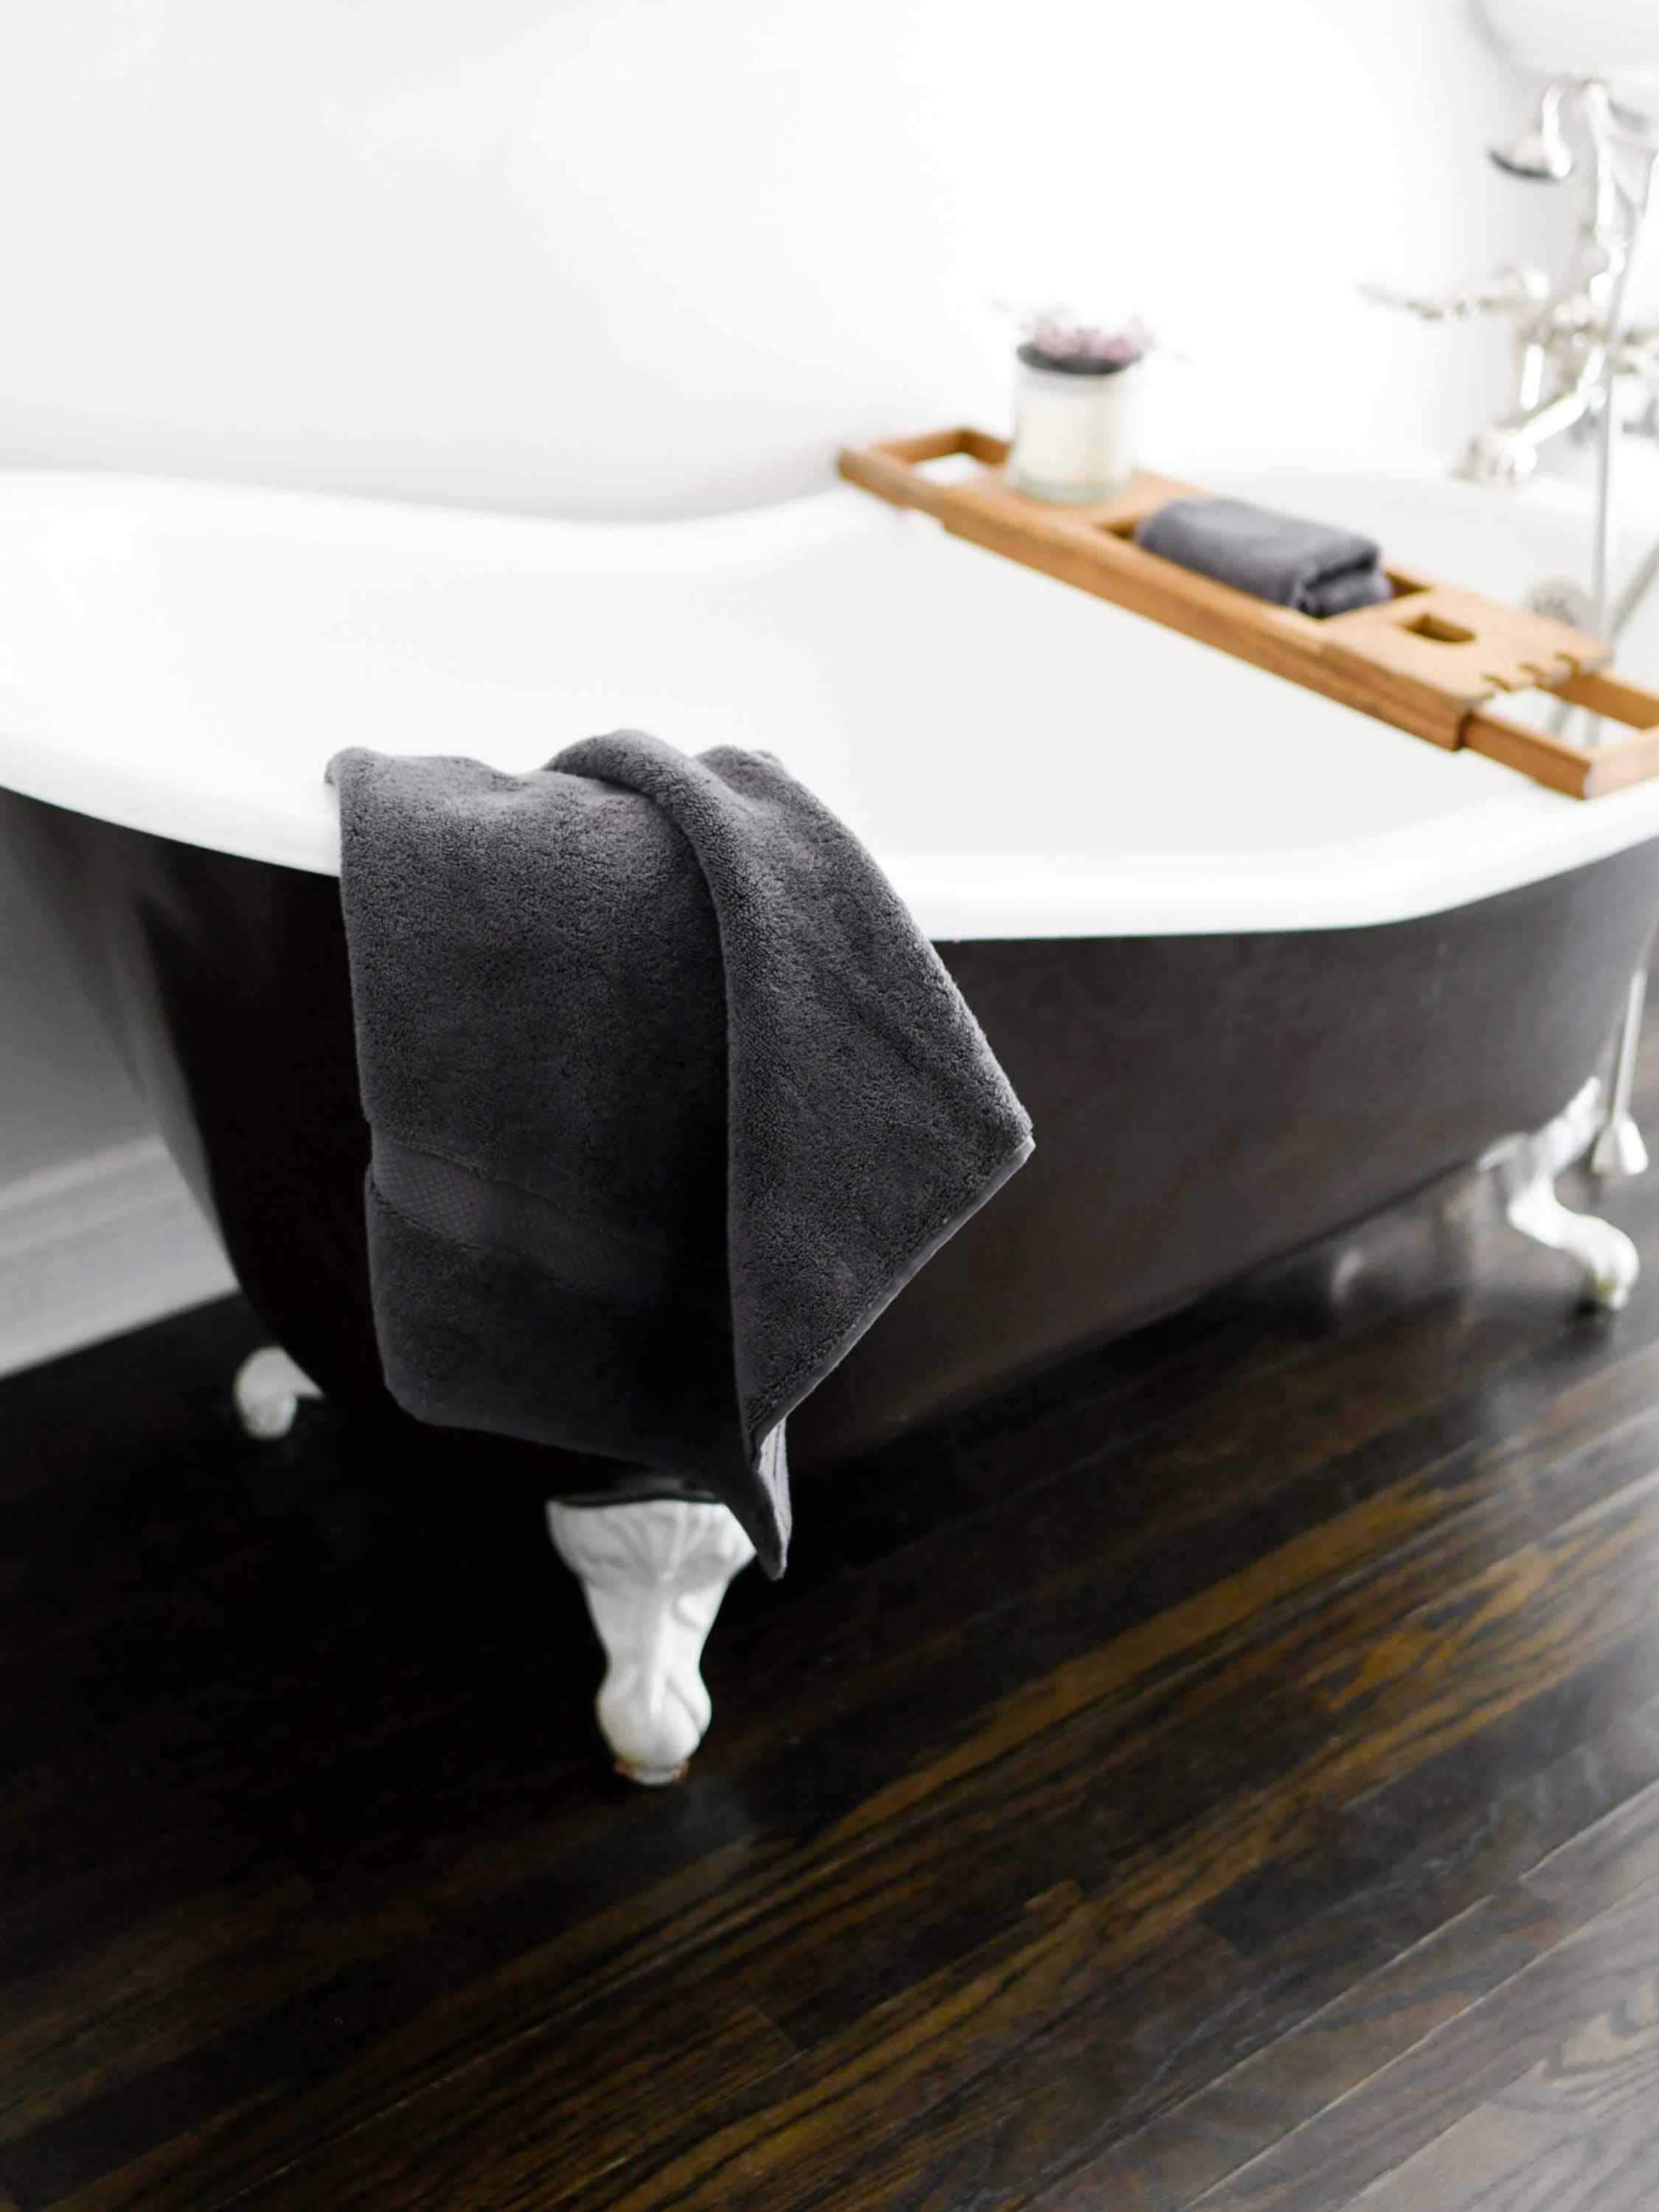 Supima Cotton Bath Towel Set by Laguna Beach Textile Co - 2 Bath